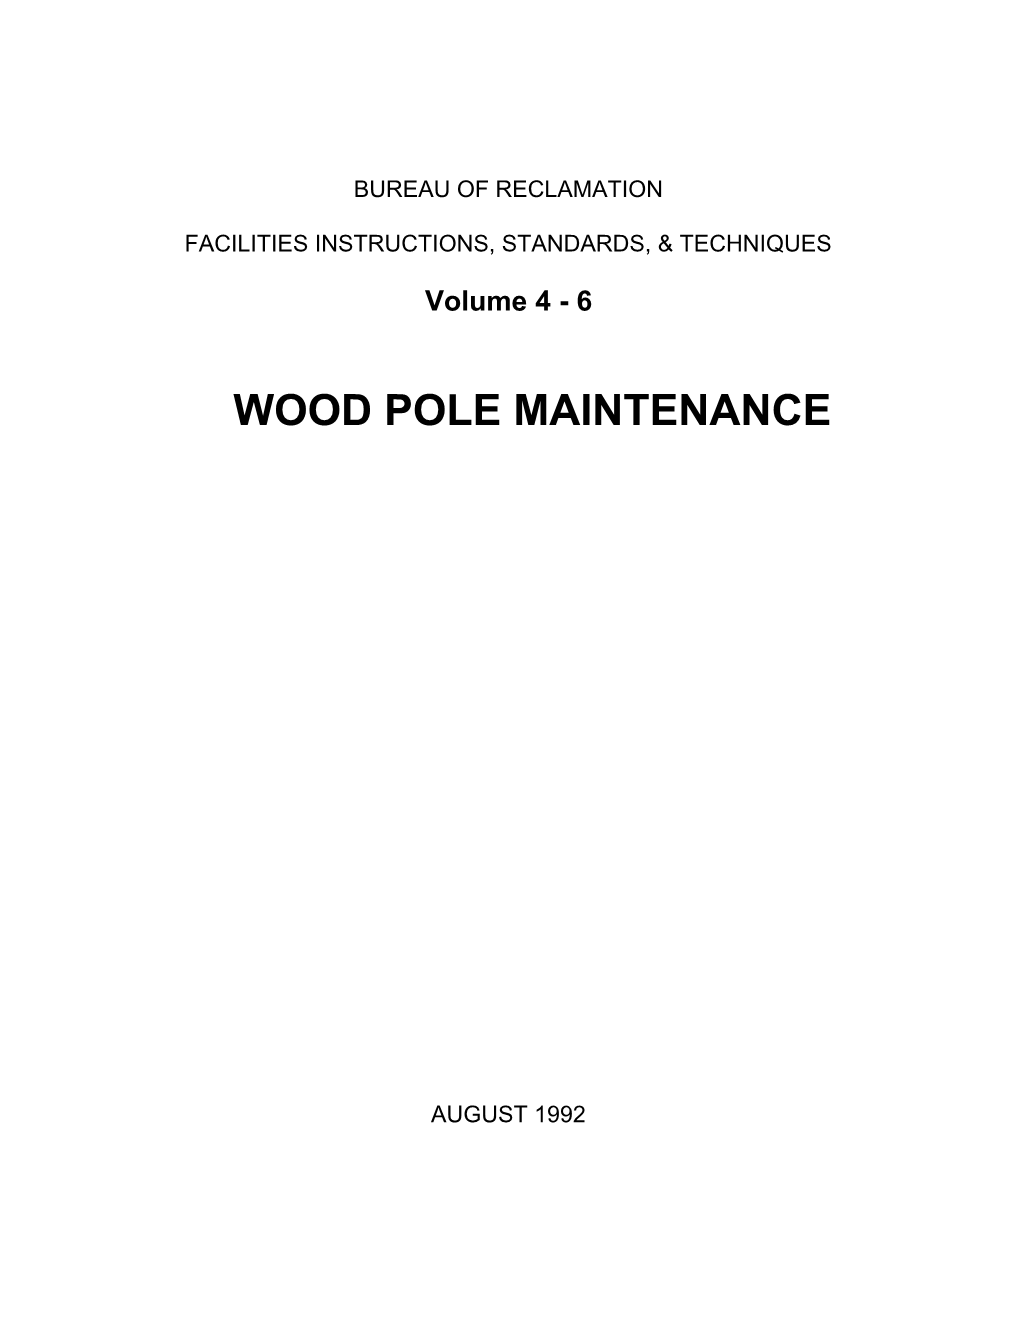 Wood Pole Maintenance